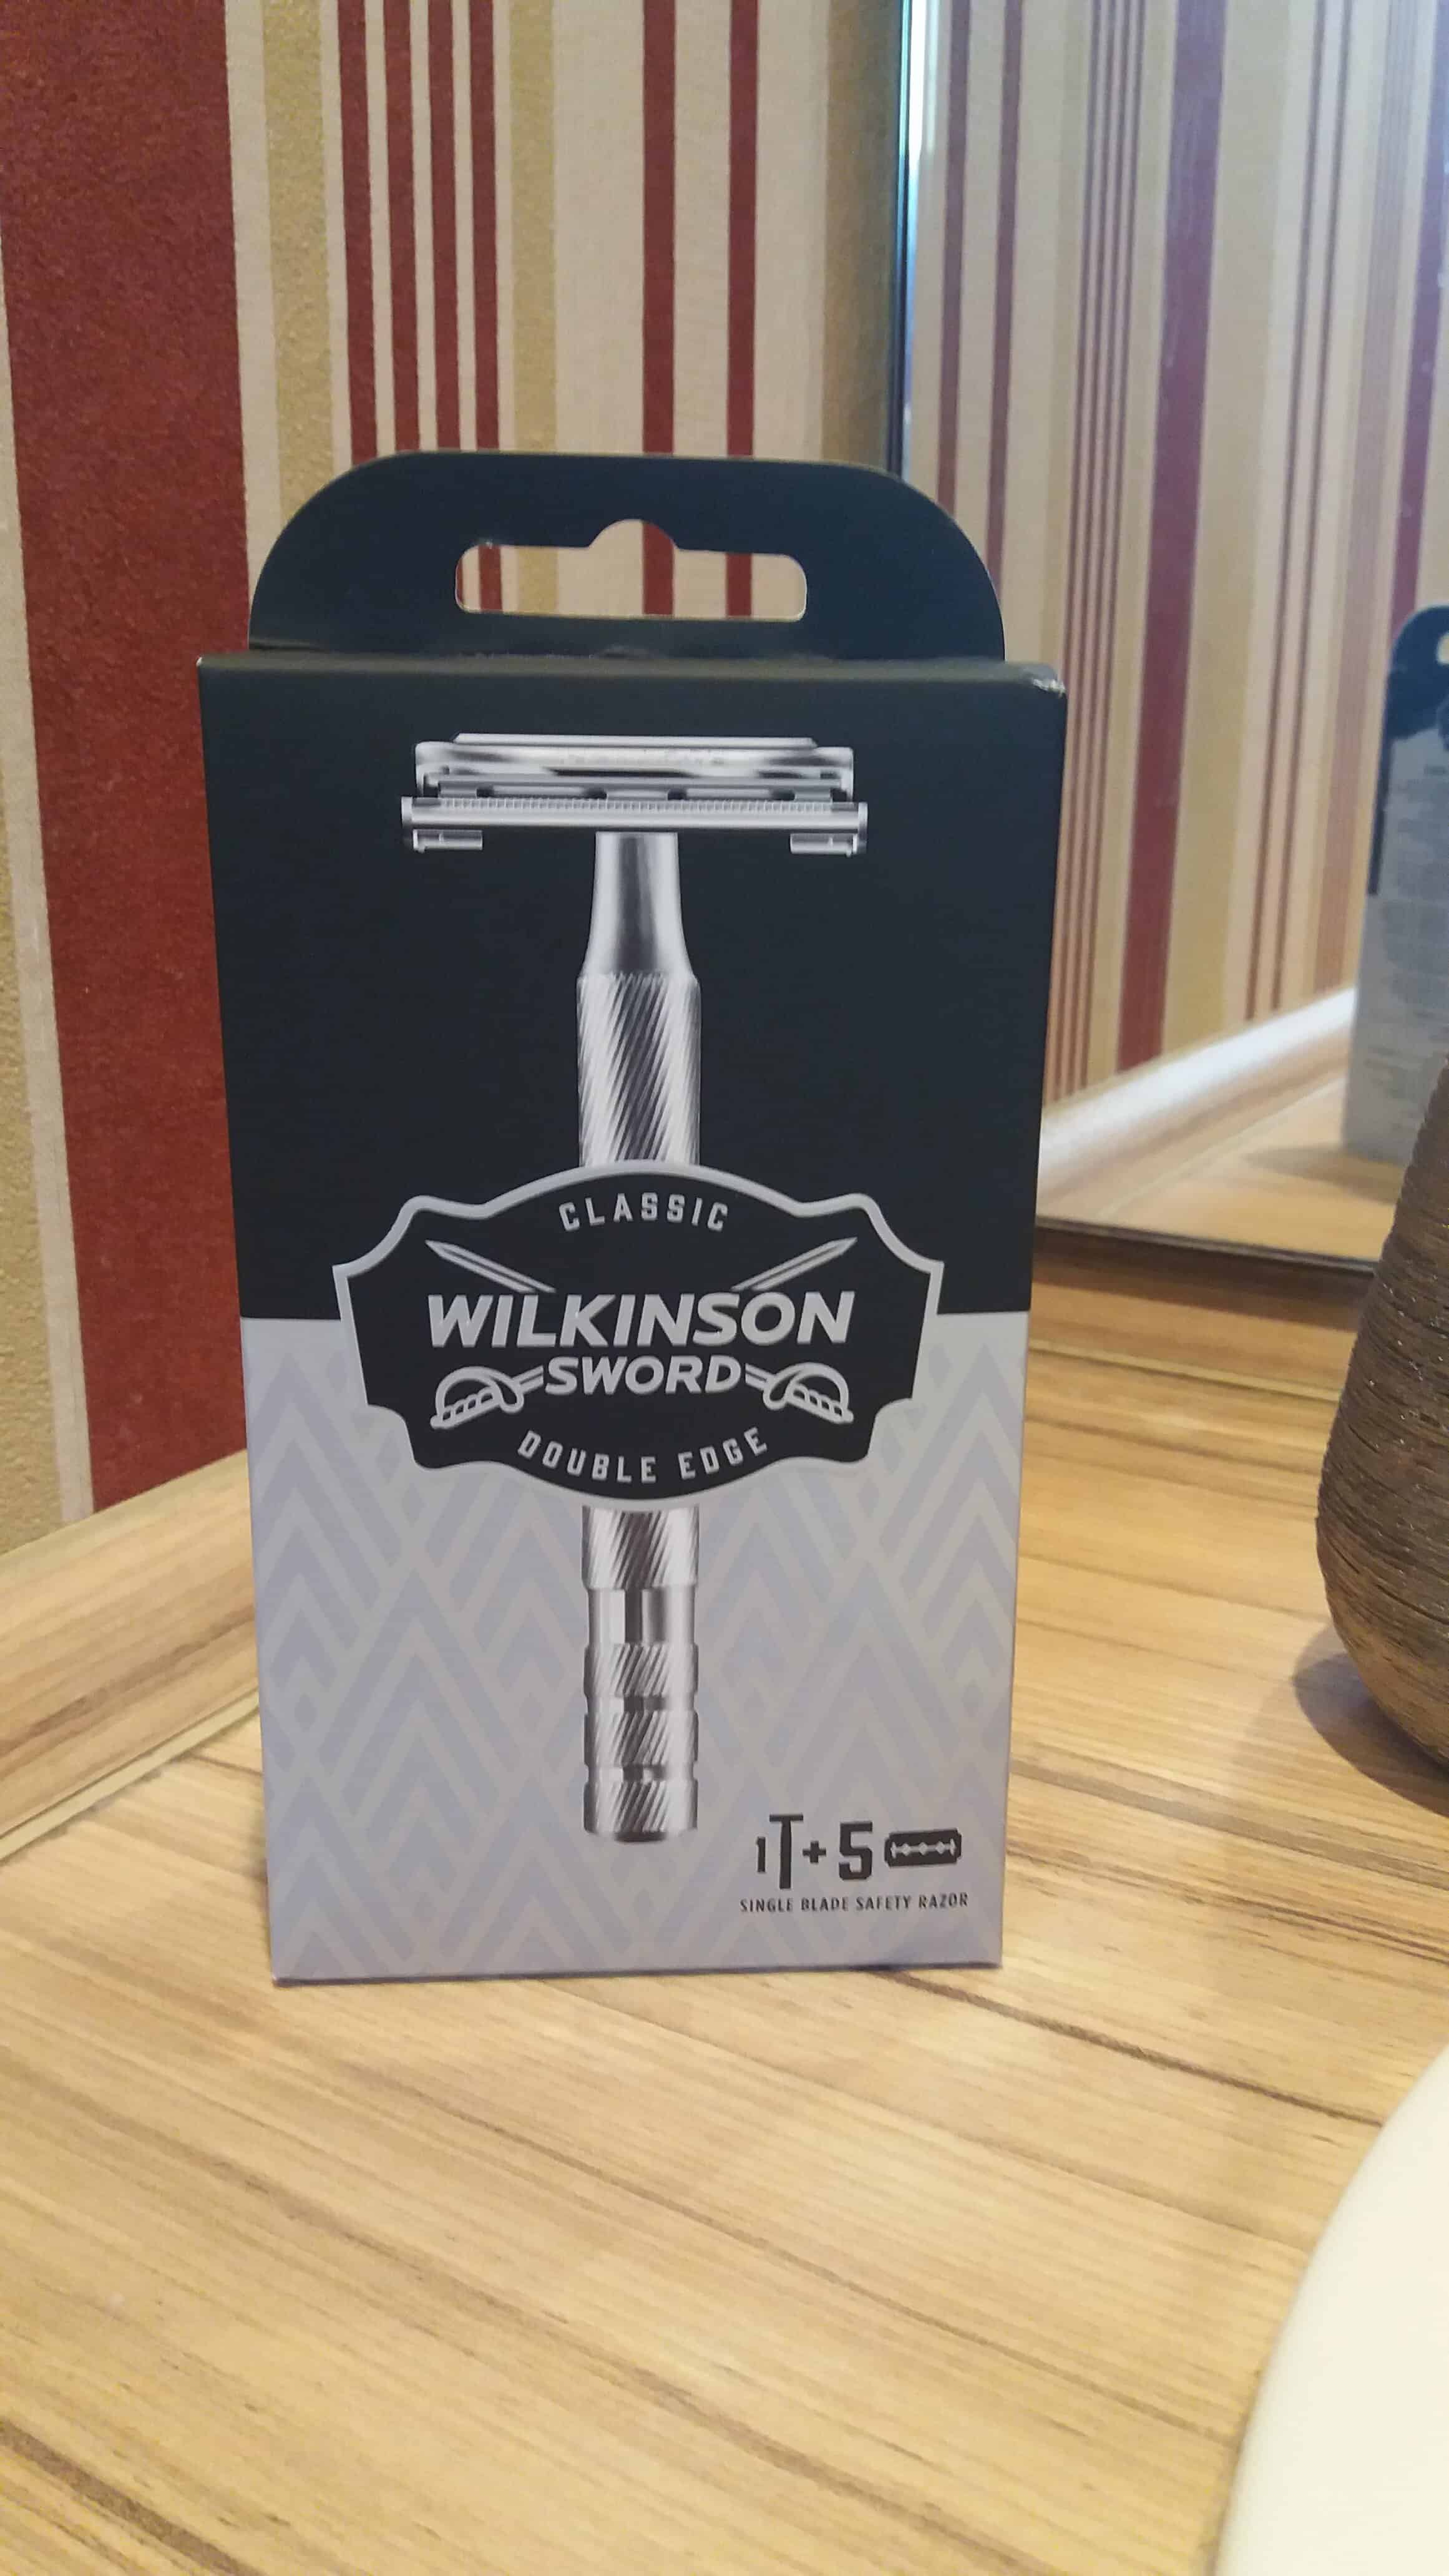 A Double Edge razor blade handle from Wilkinson